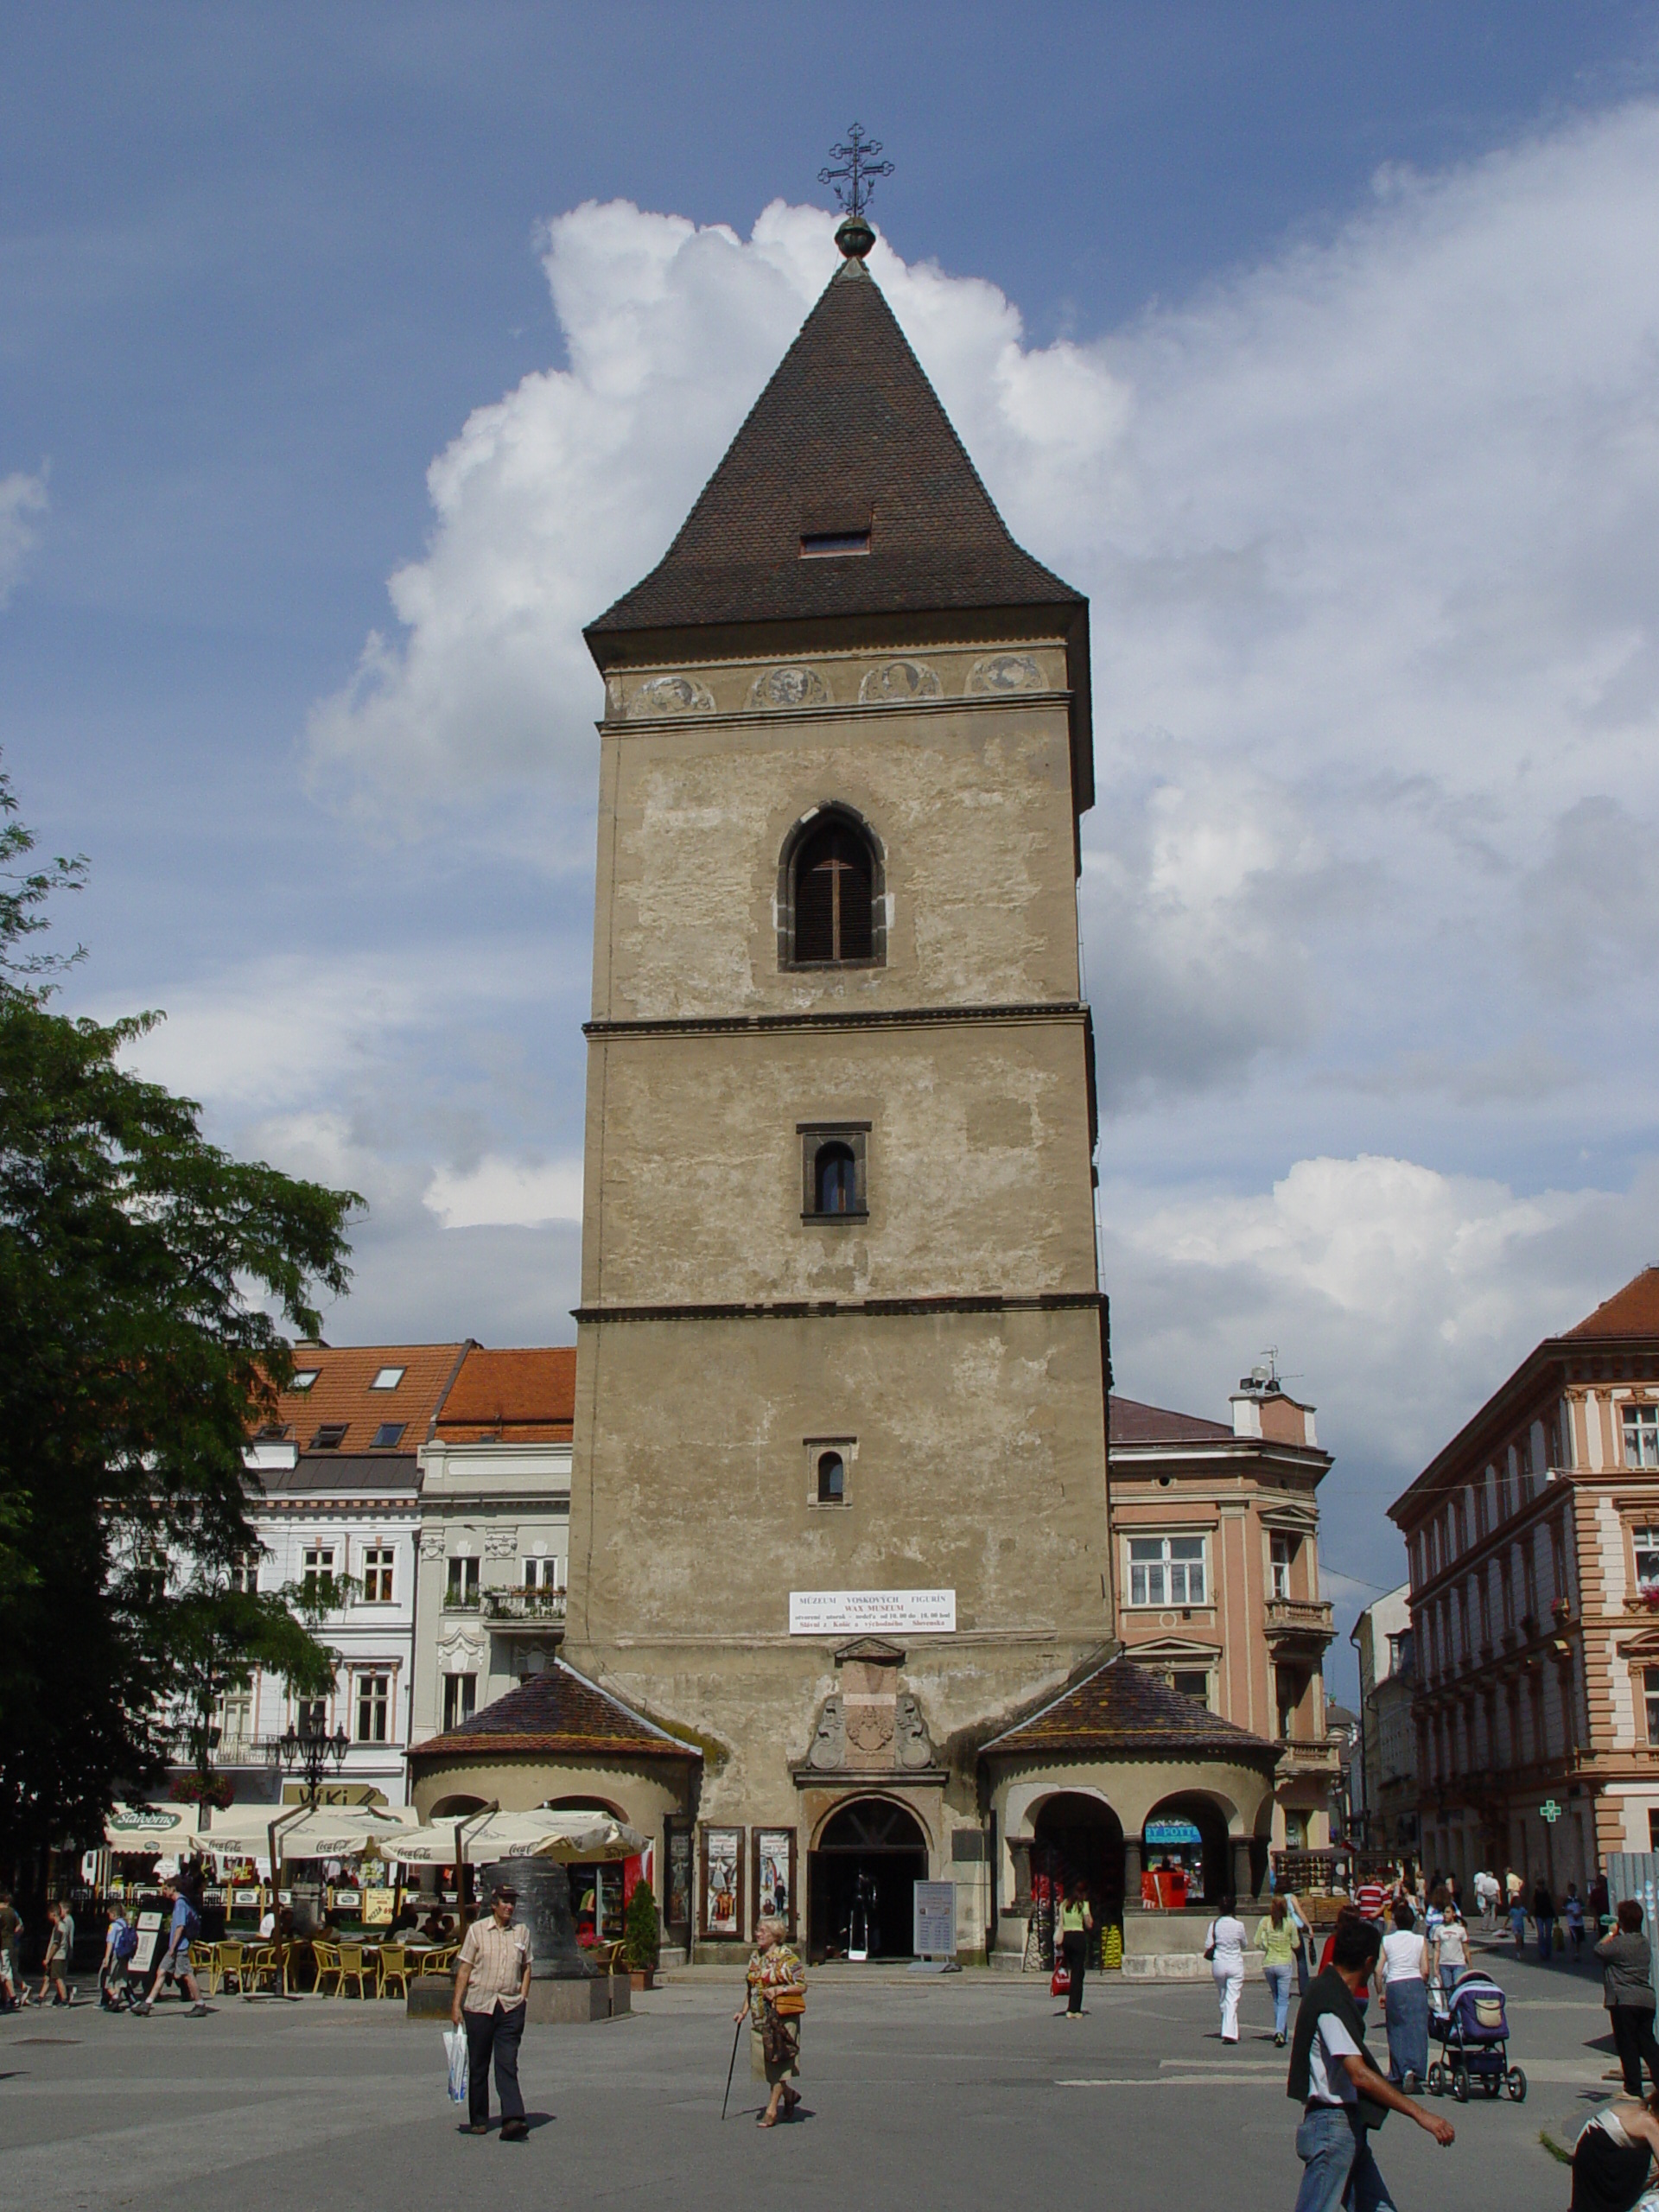 File:Kosice (Slovakia) - St. Urban's Tower.jpg - Wikimedia Commons